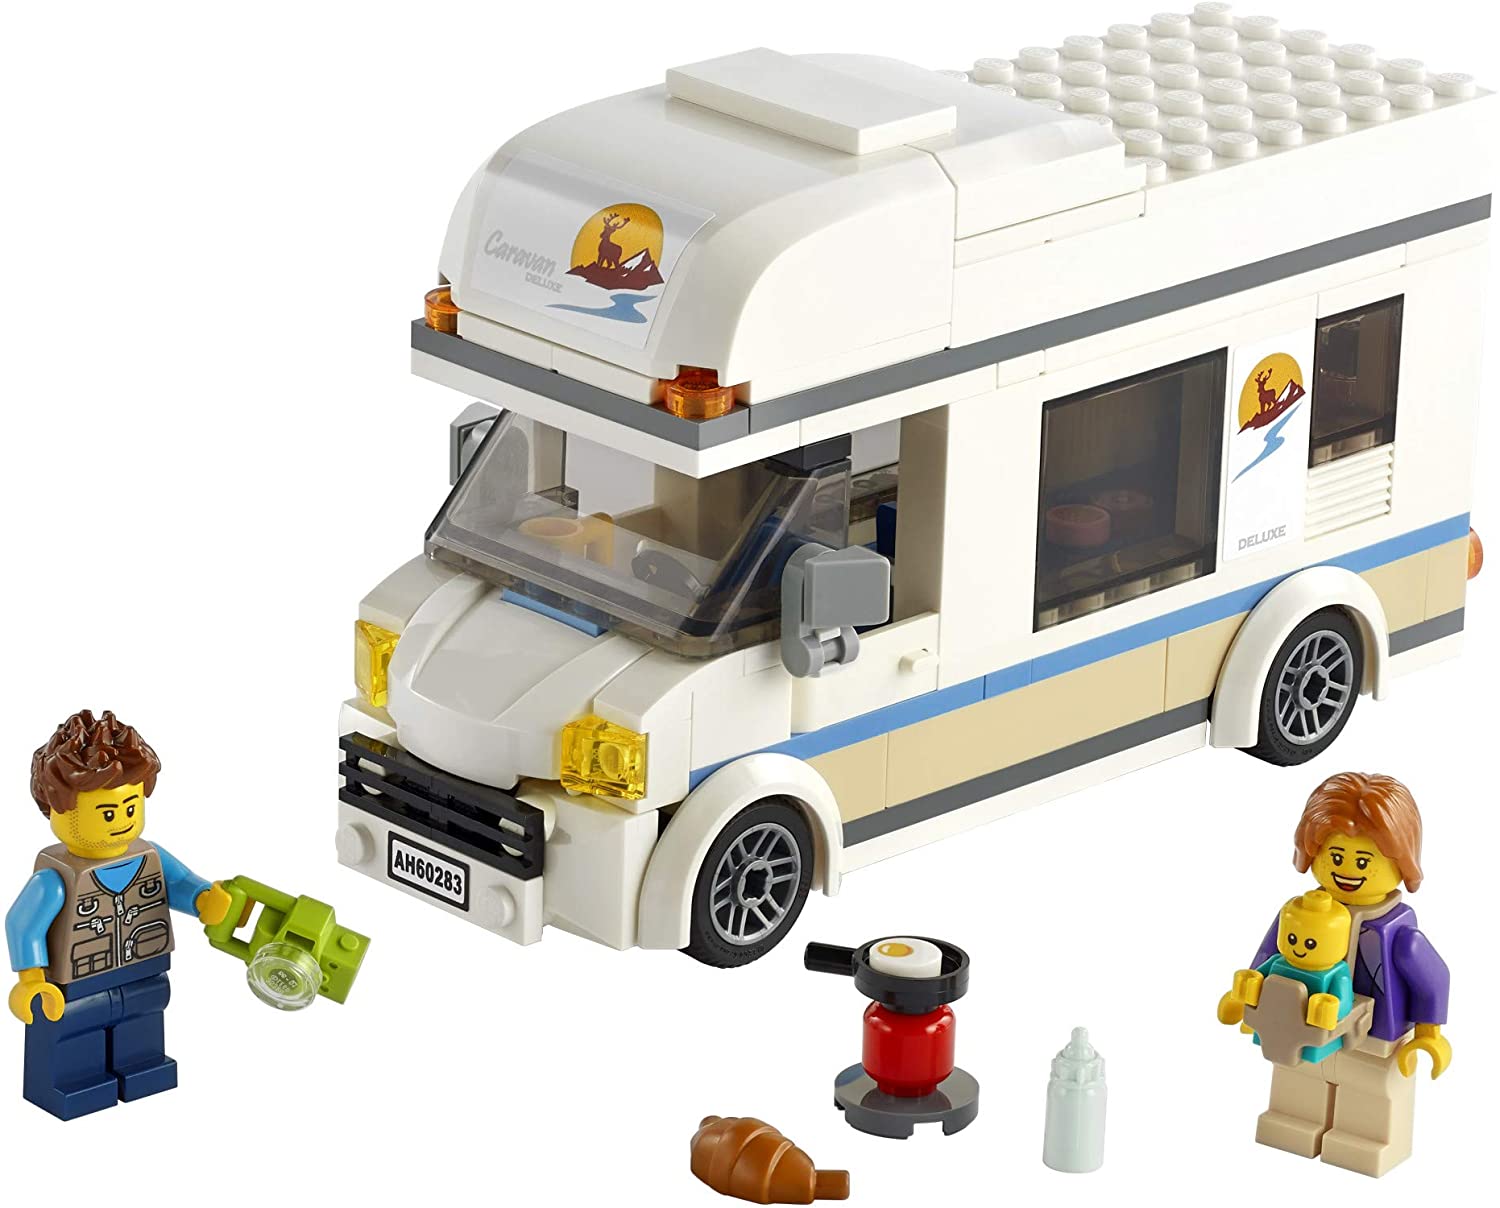 LEGO City Holiday Camper Van #60283